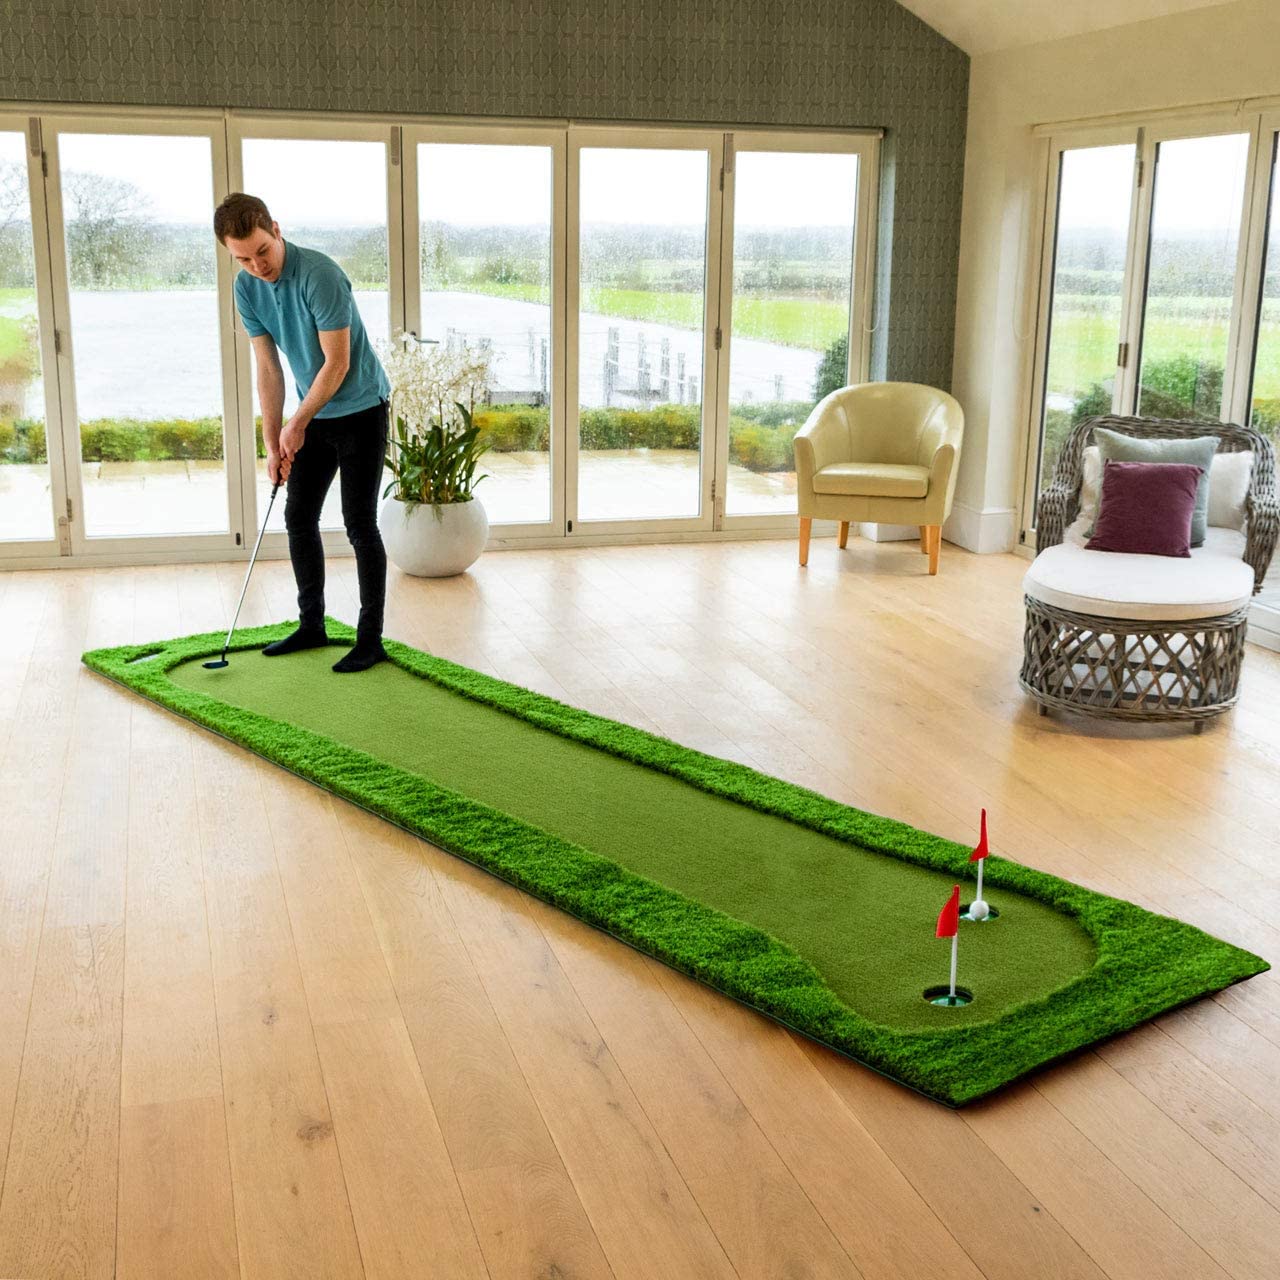 FORB Professional Putting Mats | Golf Accessories | Putting Practice Golf Mat | Indoor Putting Green | Putting Mats Indoor | Three (Standard, XL & XXL)